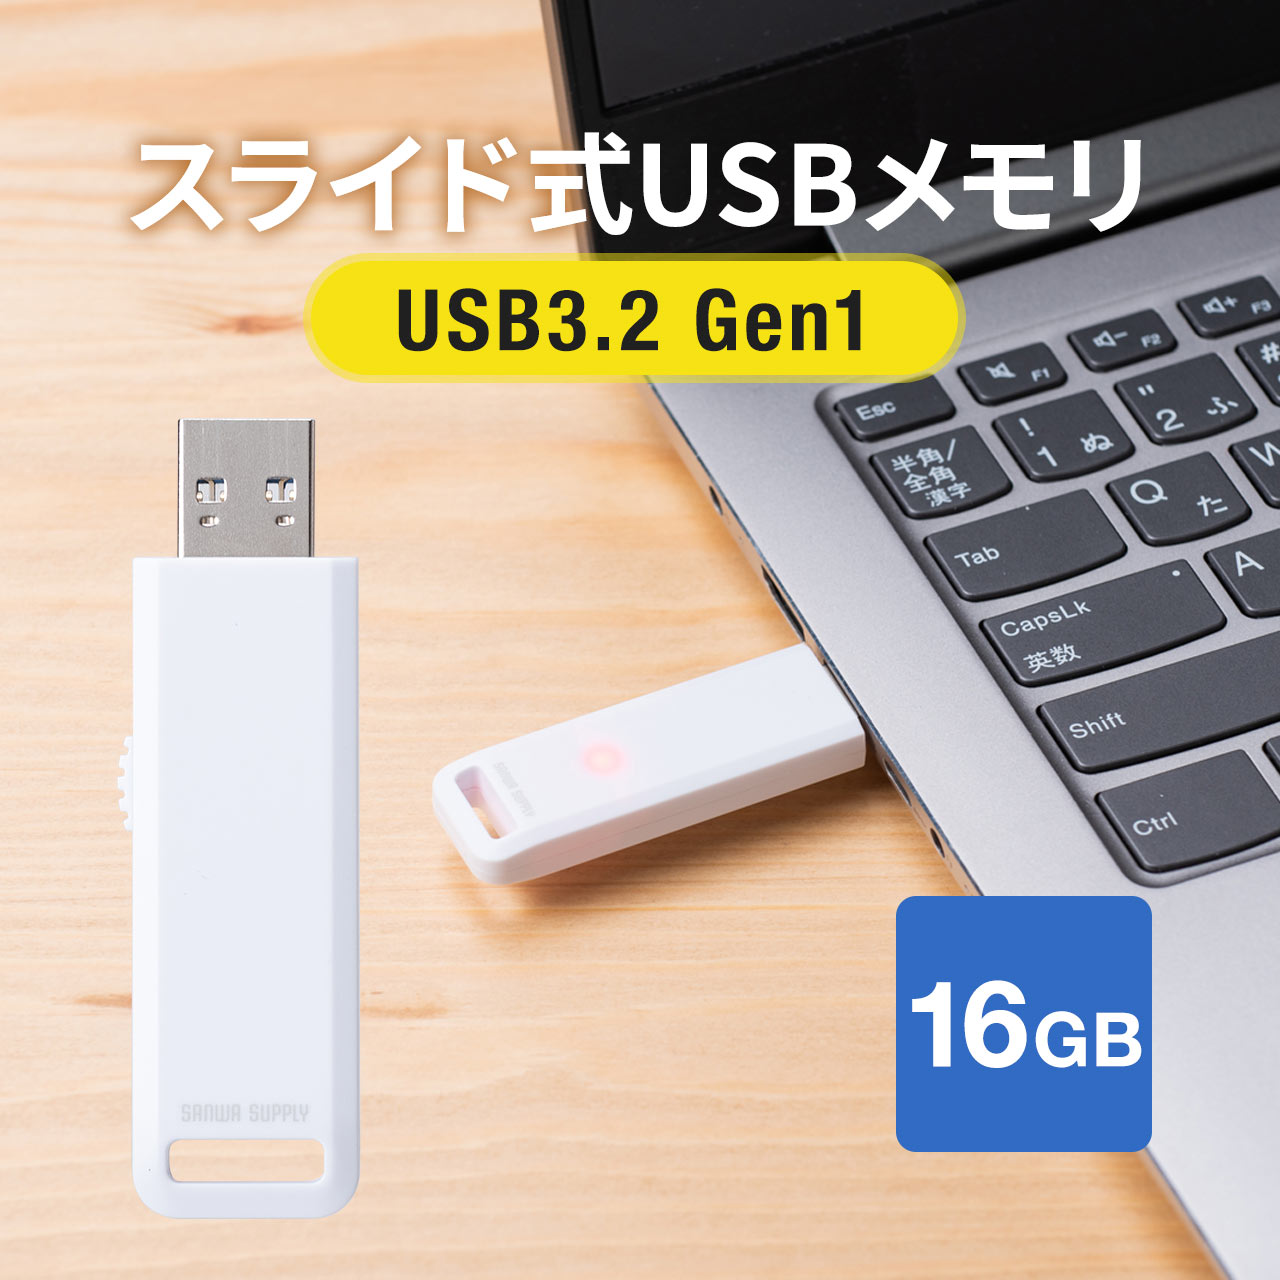 USB f[^] XCh 16GB USB3.2 Gen1 zCg ANZXv